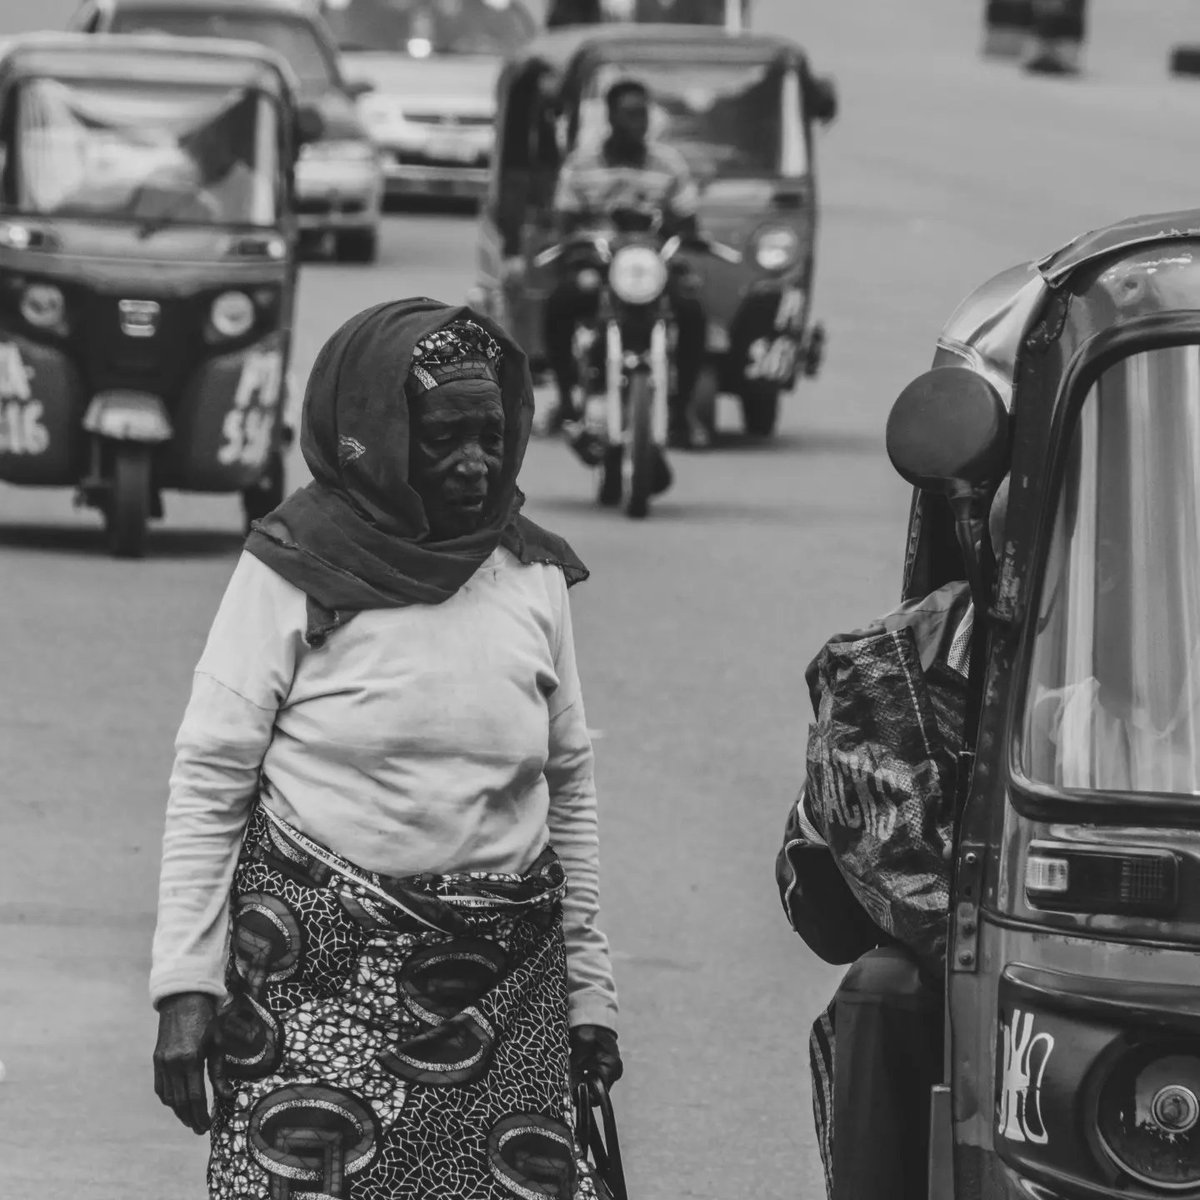 What's your new experience with Tricycle (Keke) drivers this week? 

#nigerianstreetphotographershub #nigeriastories #subsidy #fuelsubsidy #keke #documentaryphotography #streetphotography #storytelling #photooftheday #yonnysmediaplex #streetdocumentary